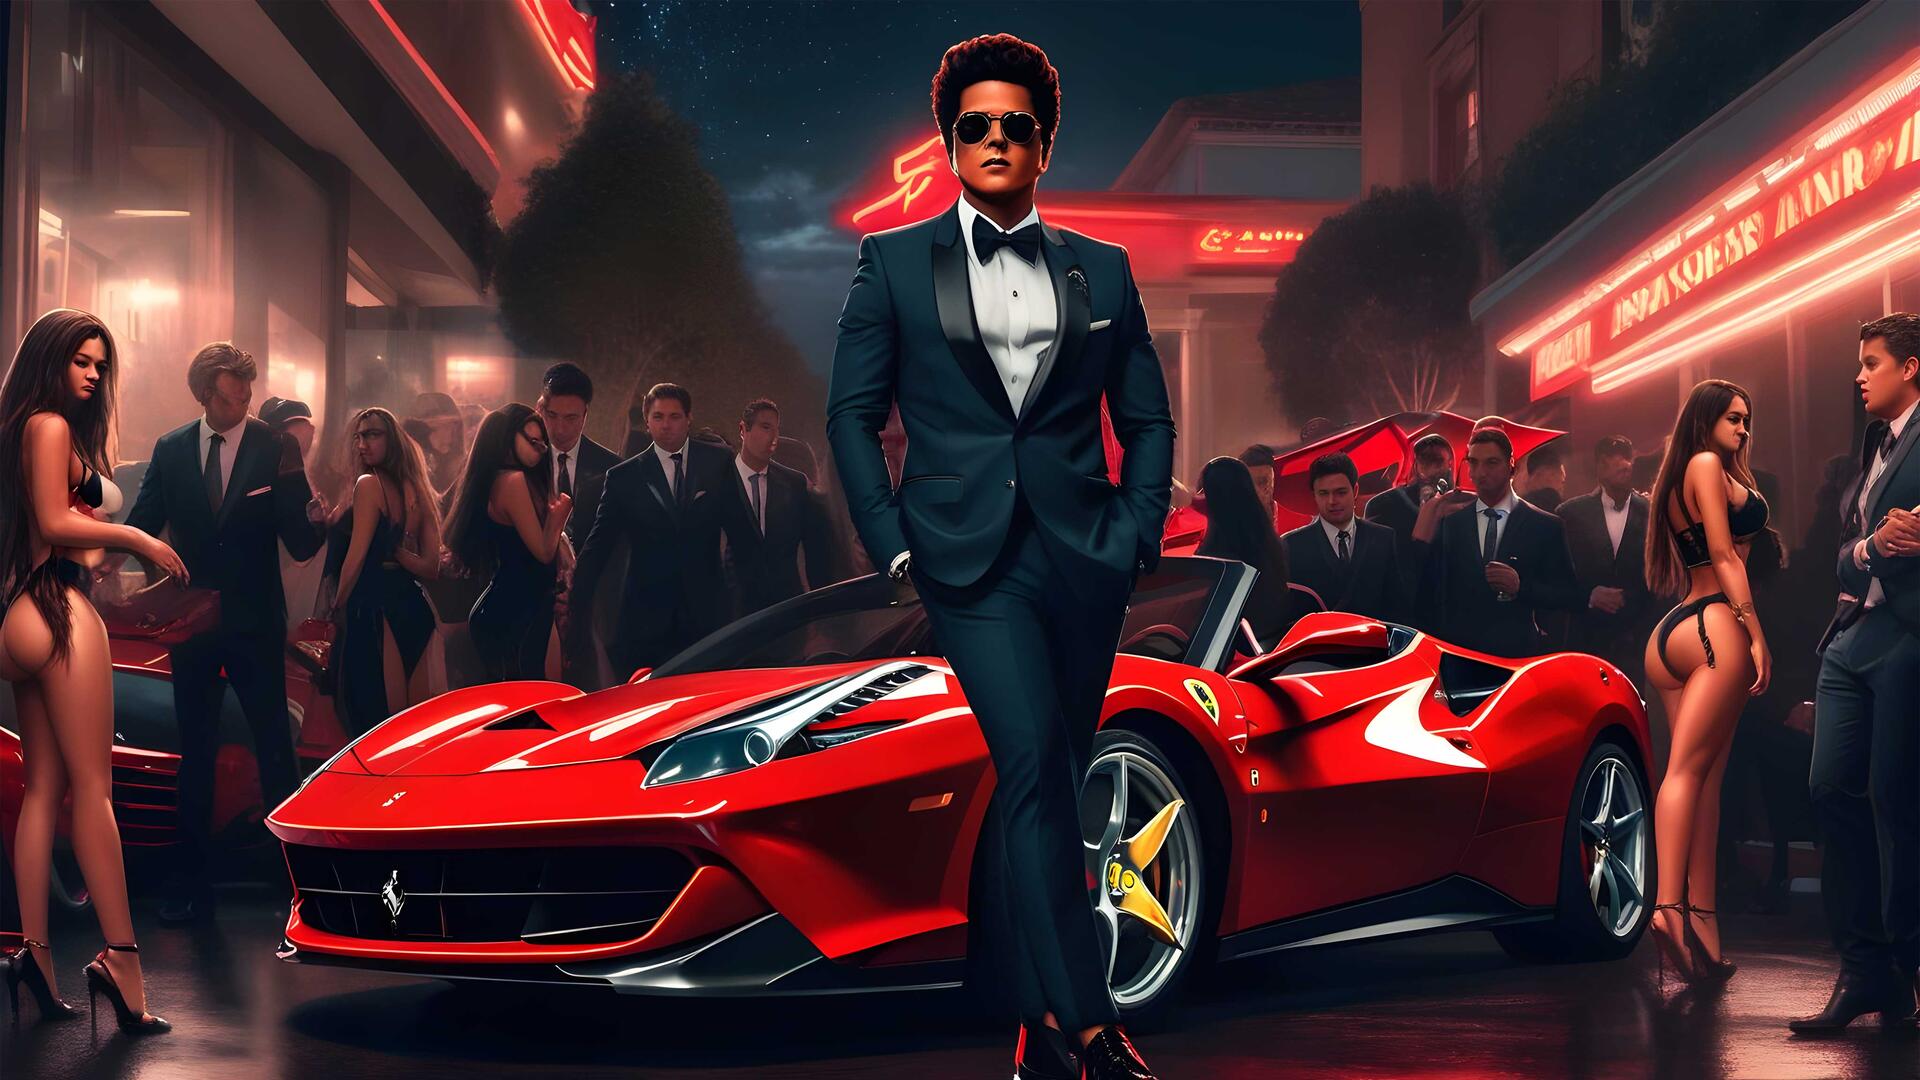 Bruno Mars with a red Ferrari